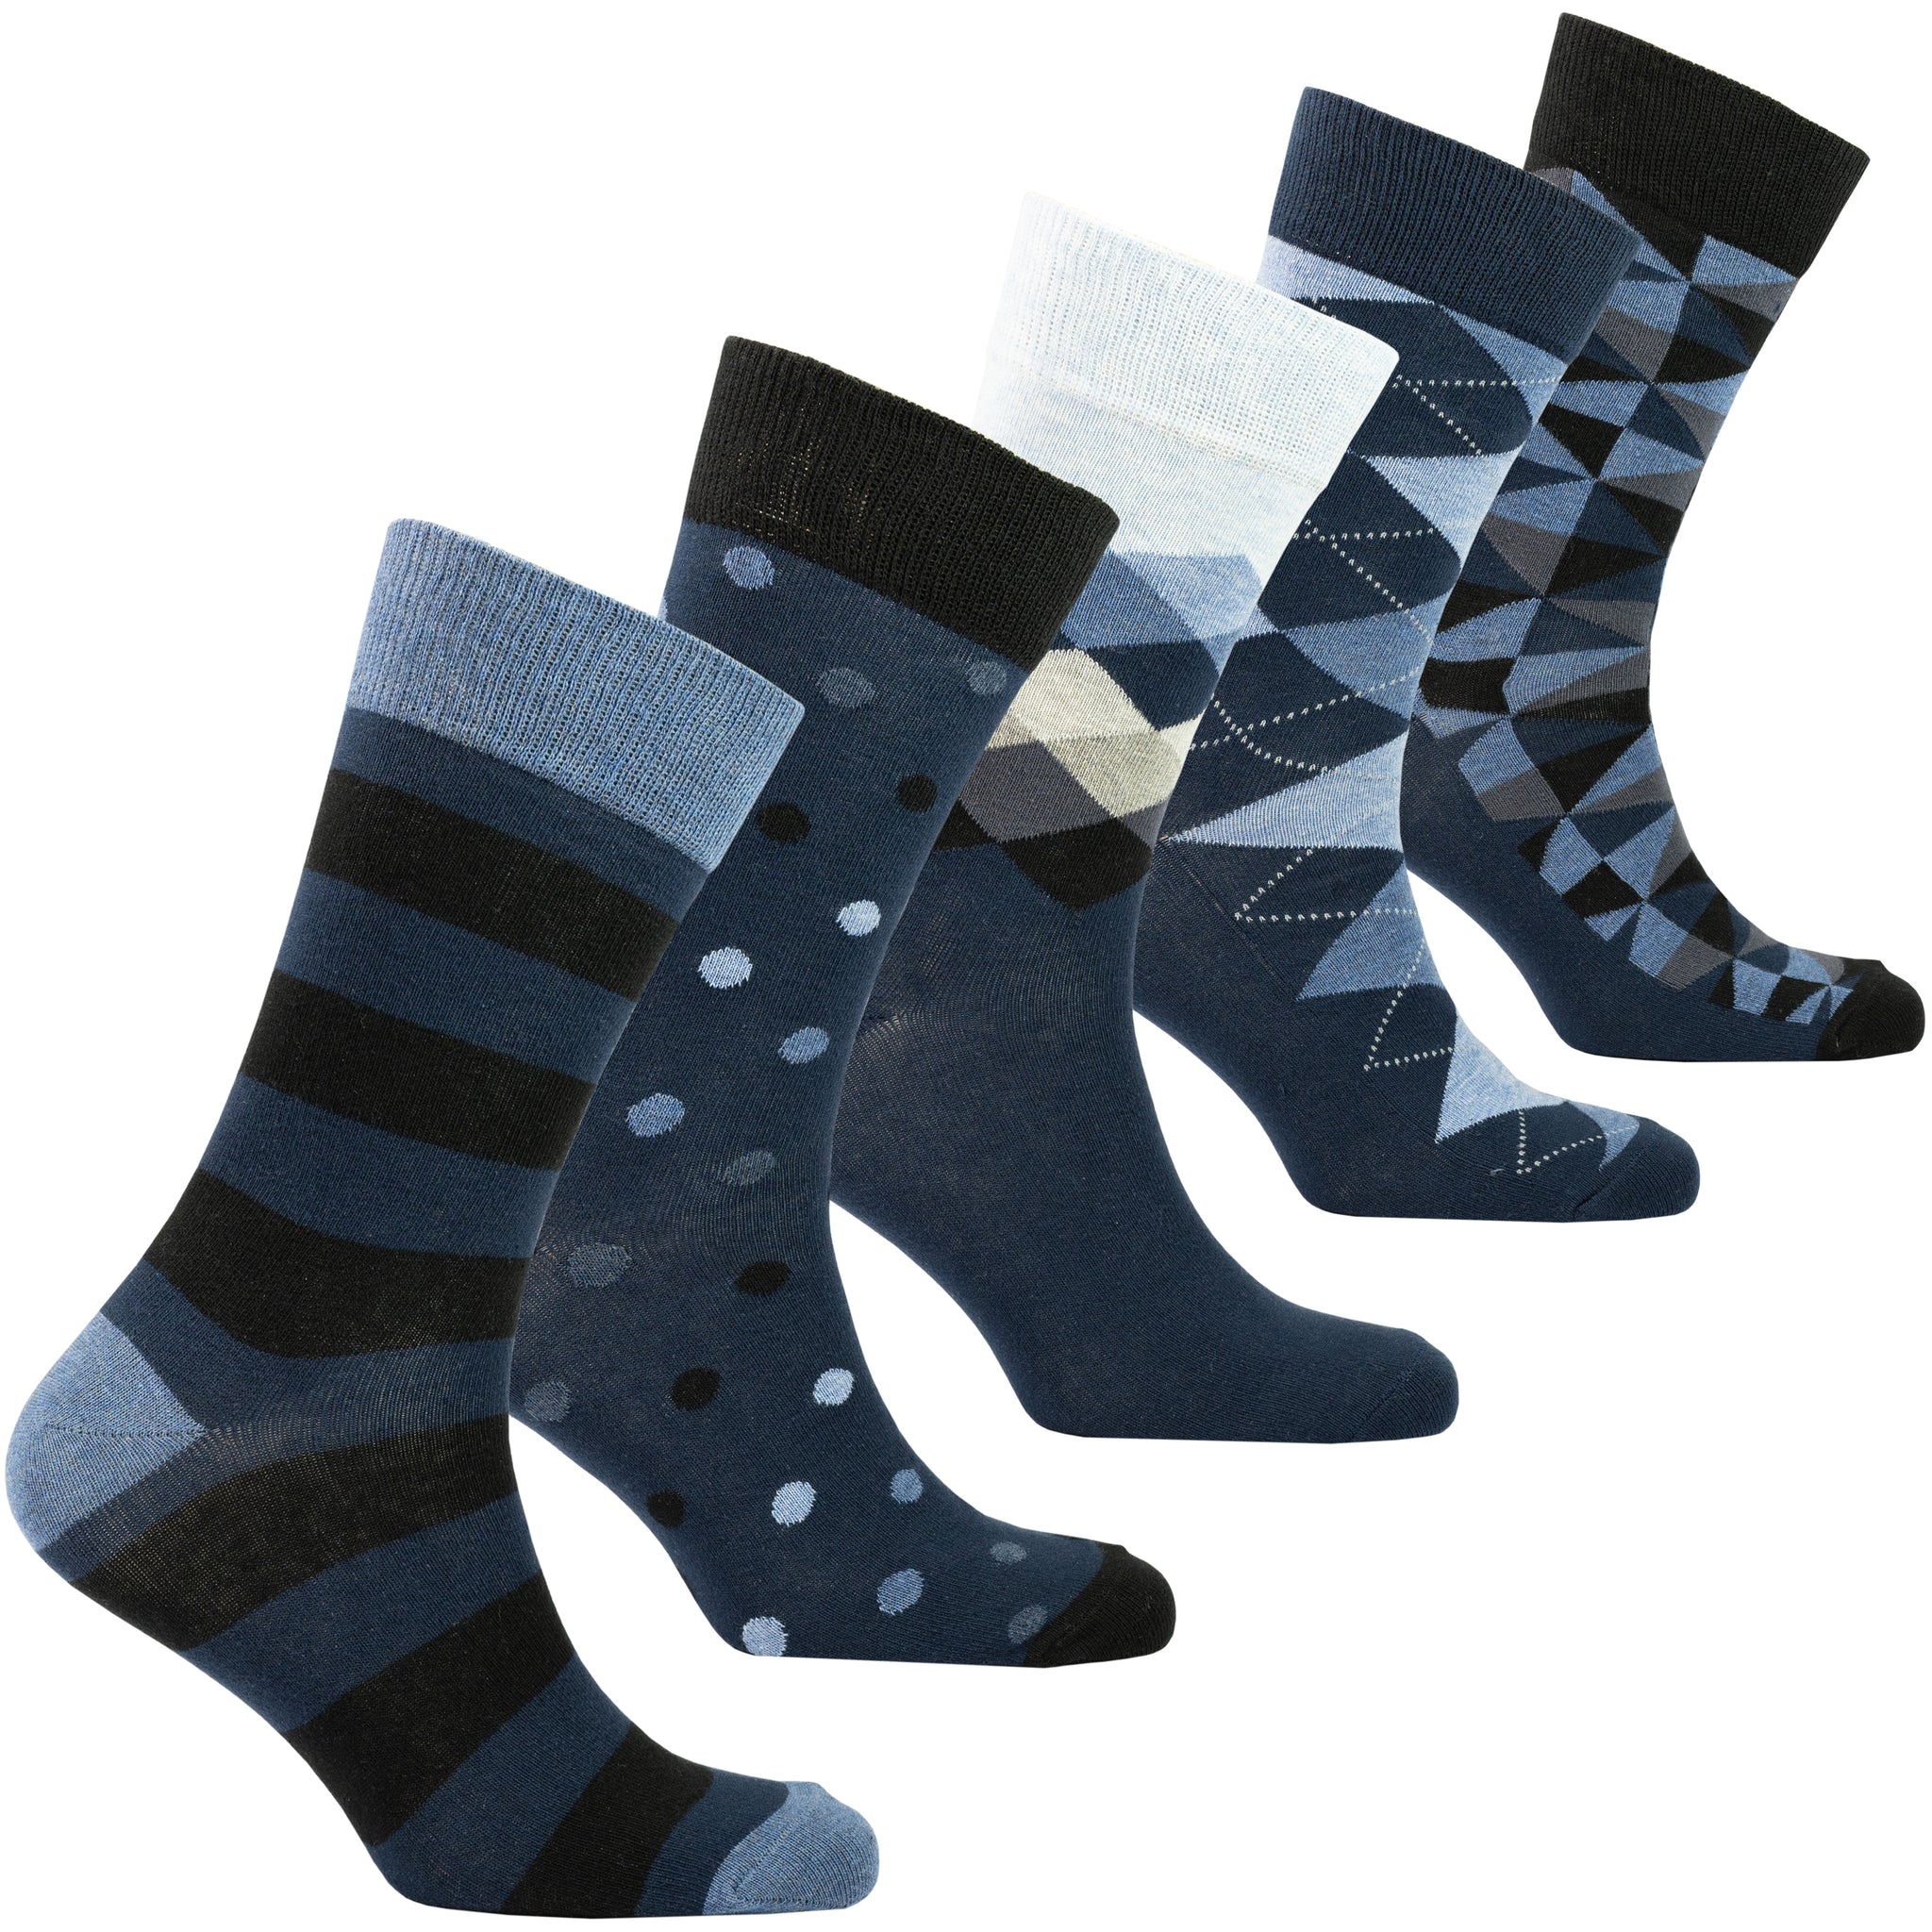 Men's Azure Mix Set Socks grey and white